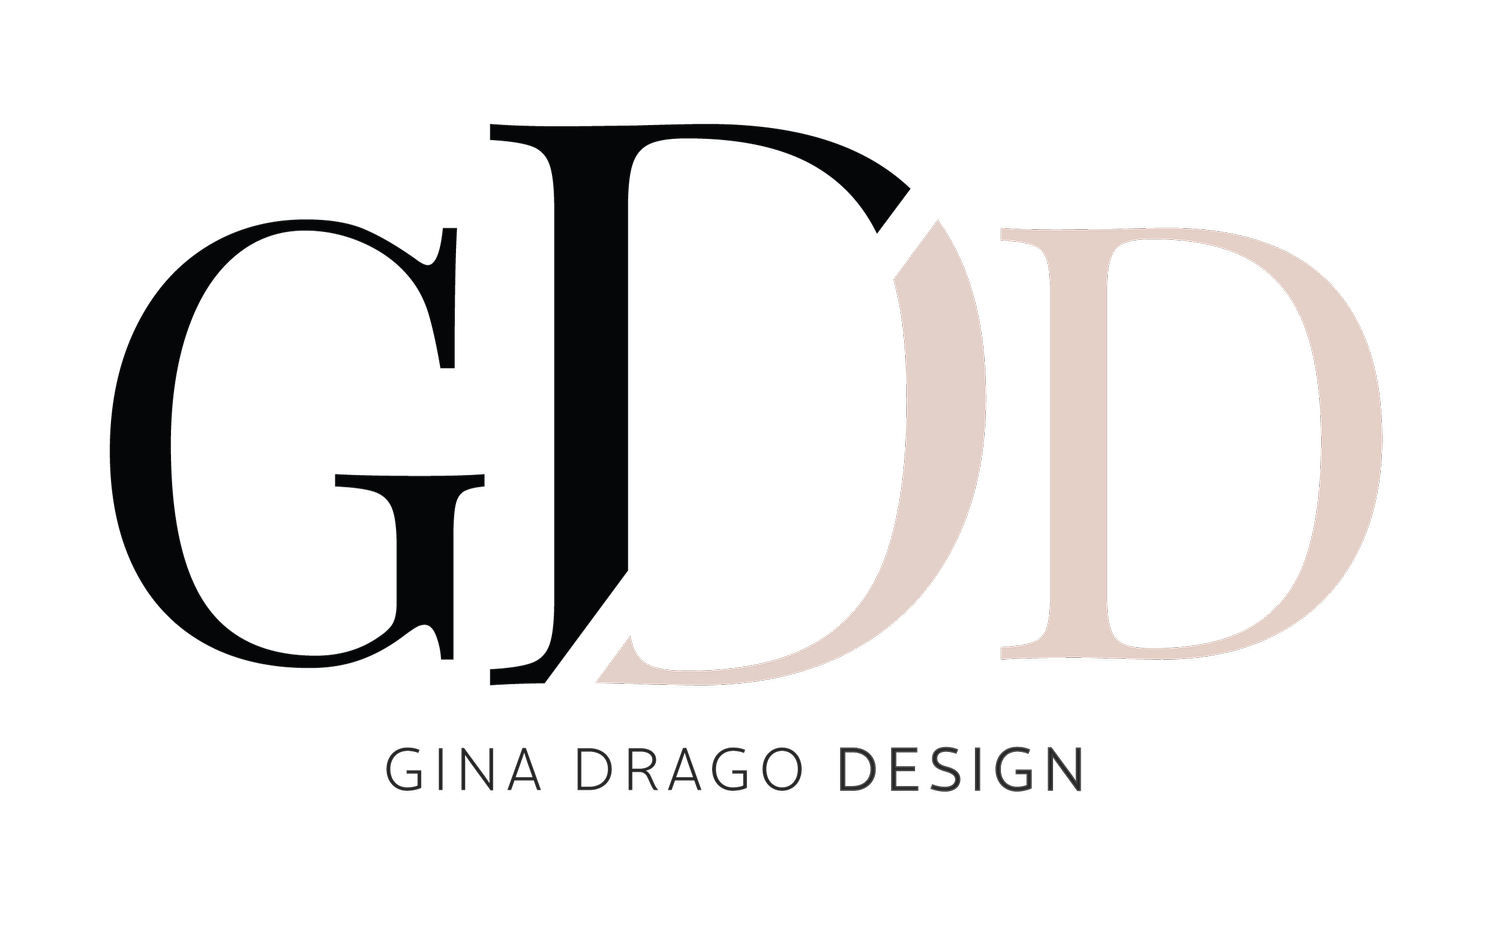 Gina Drago Design